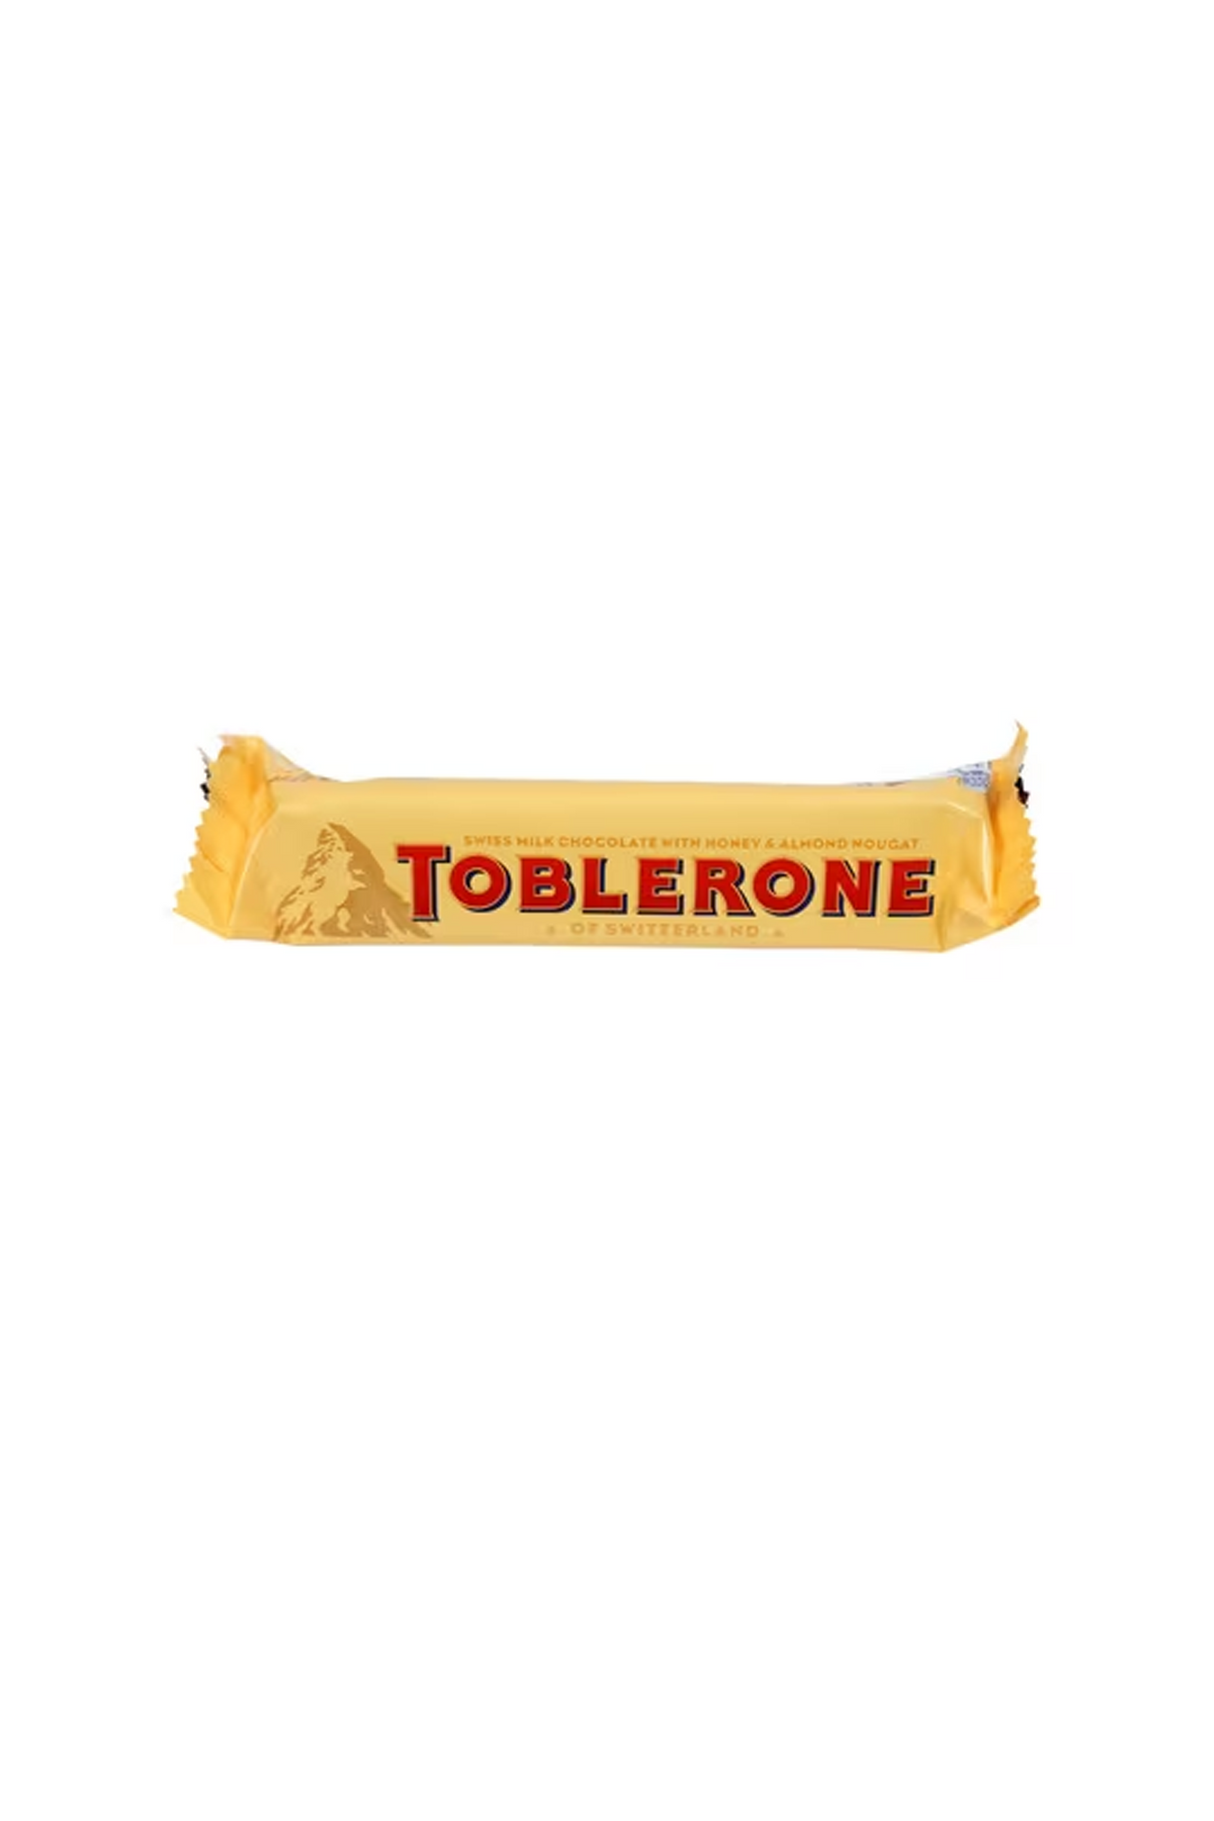 toblerone chocolate 35g